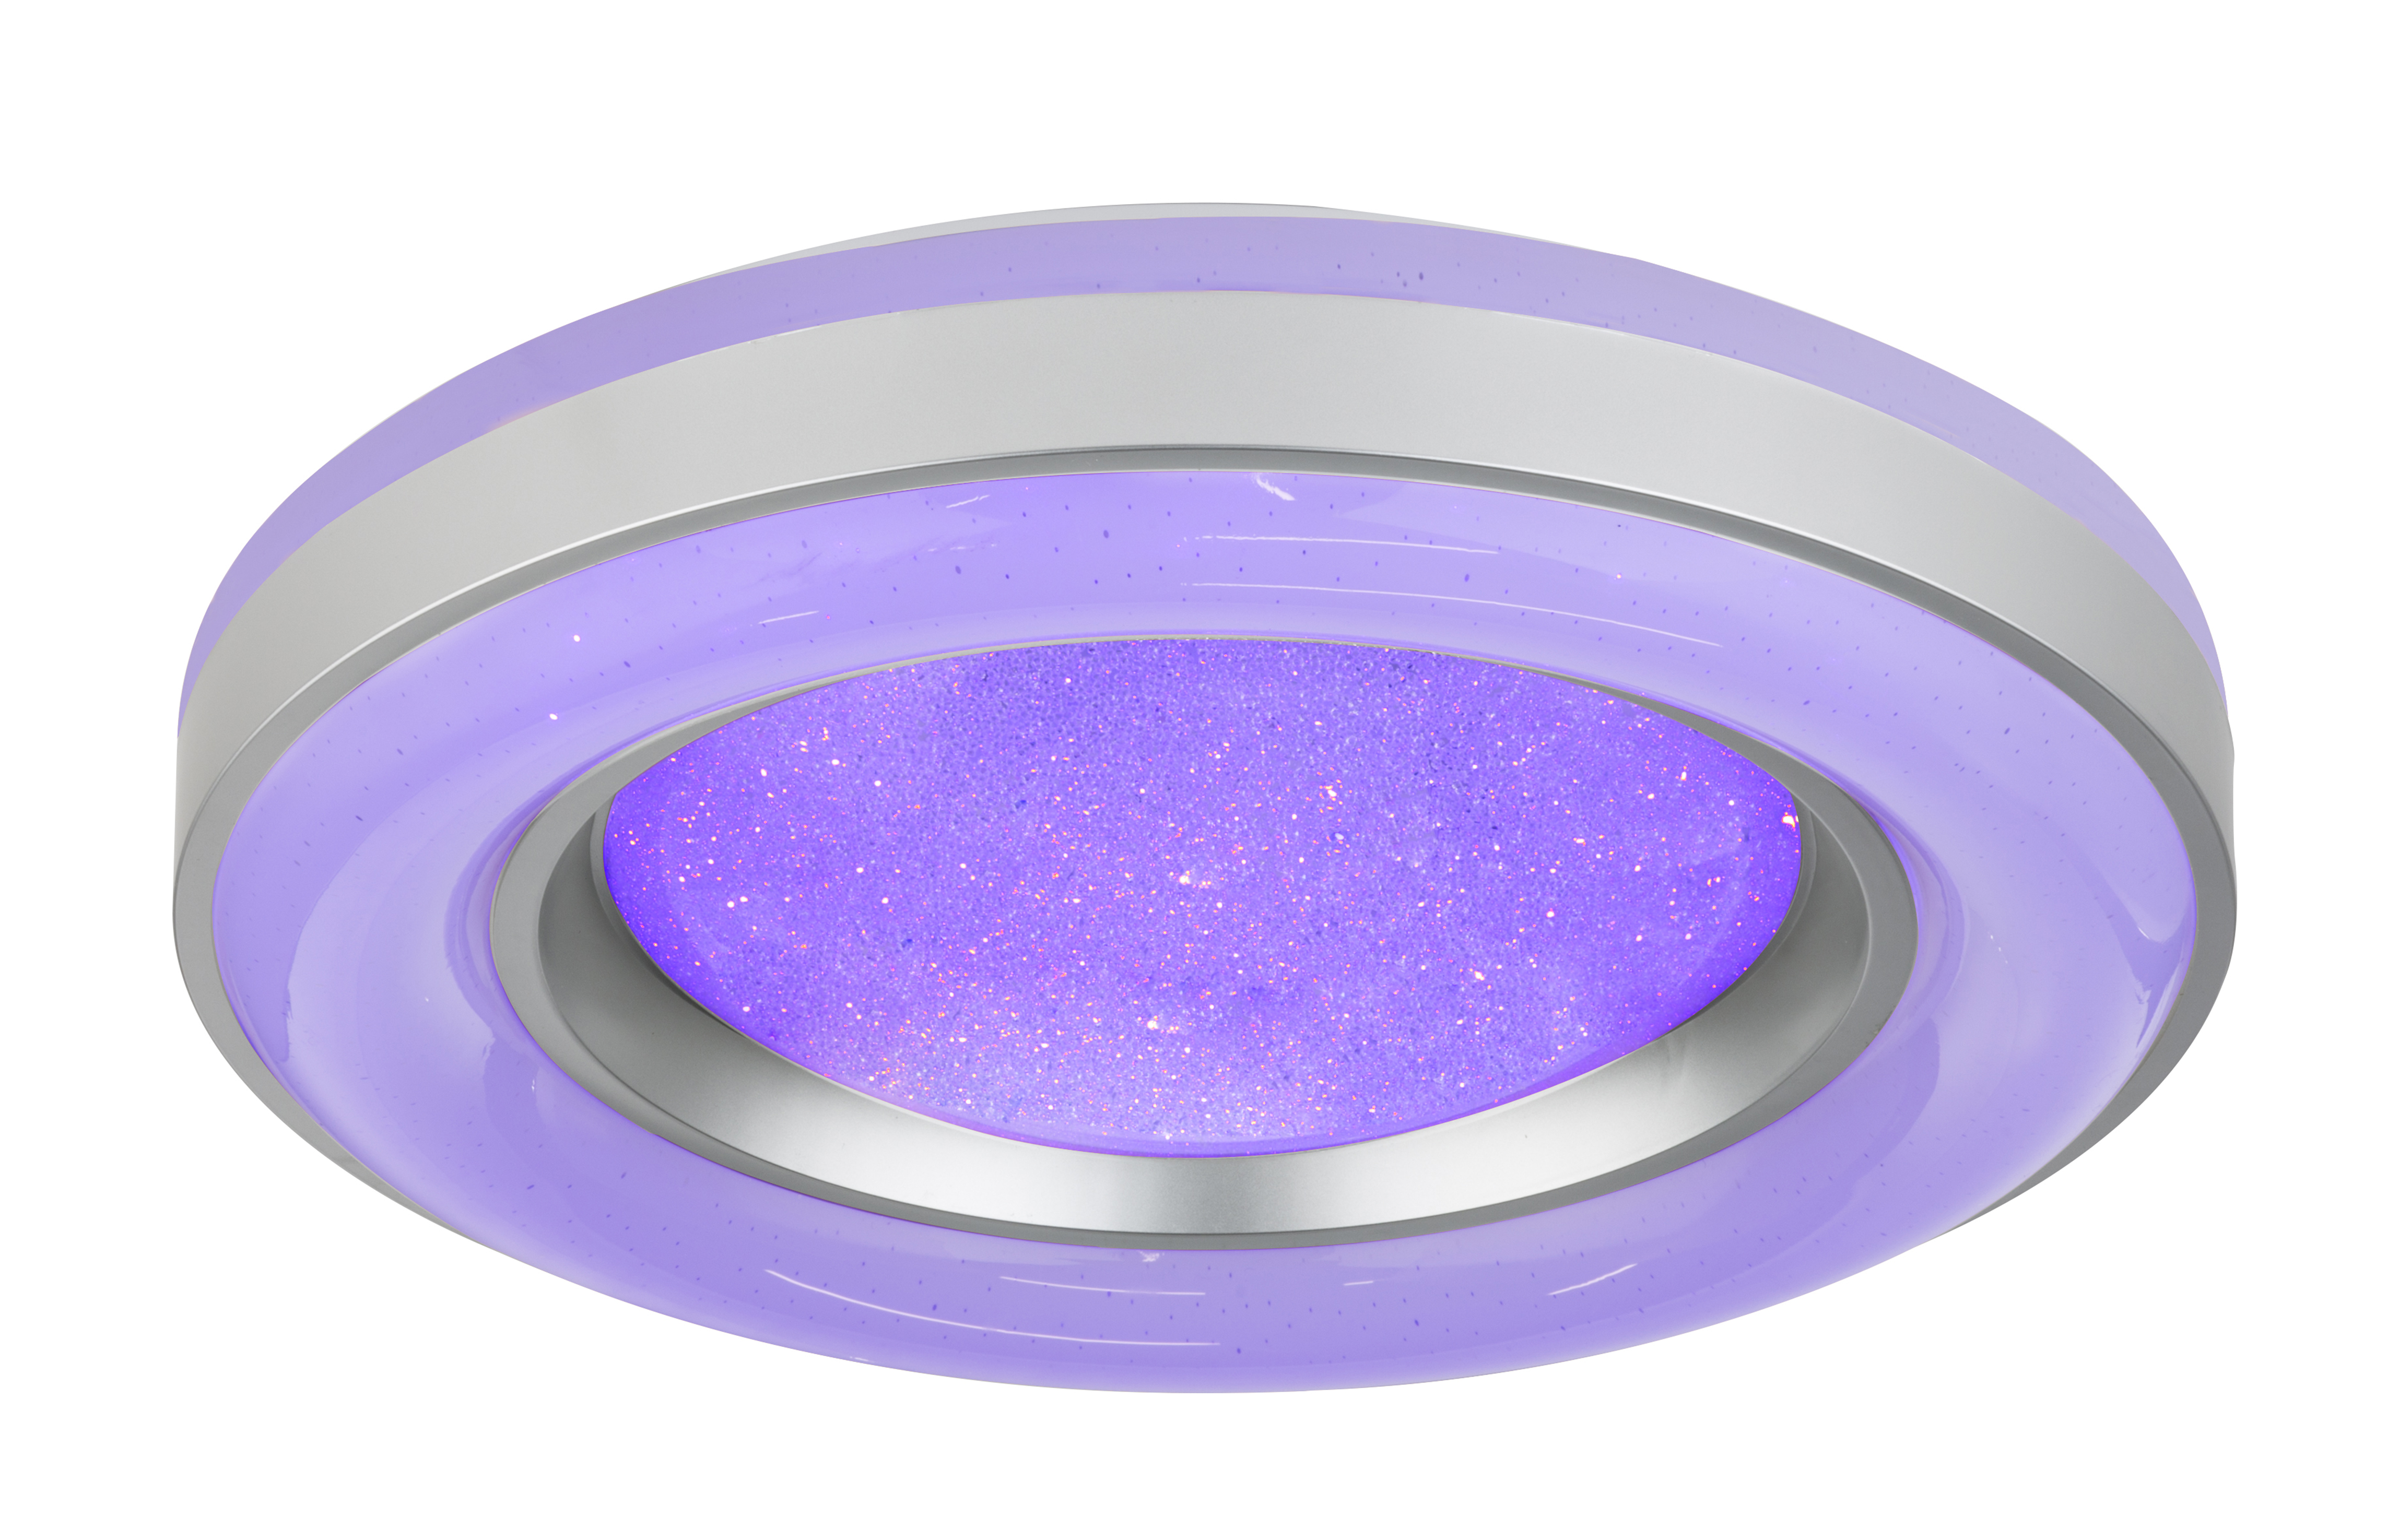 Deckenleuchte - Metall weiß - Acryl opal sparkle - 41741-48RGB